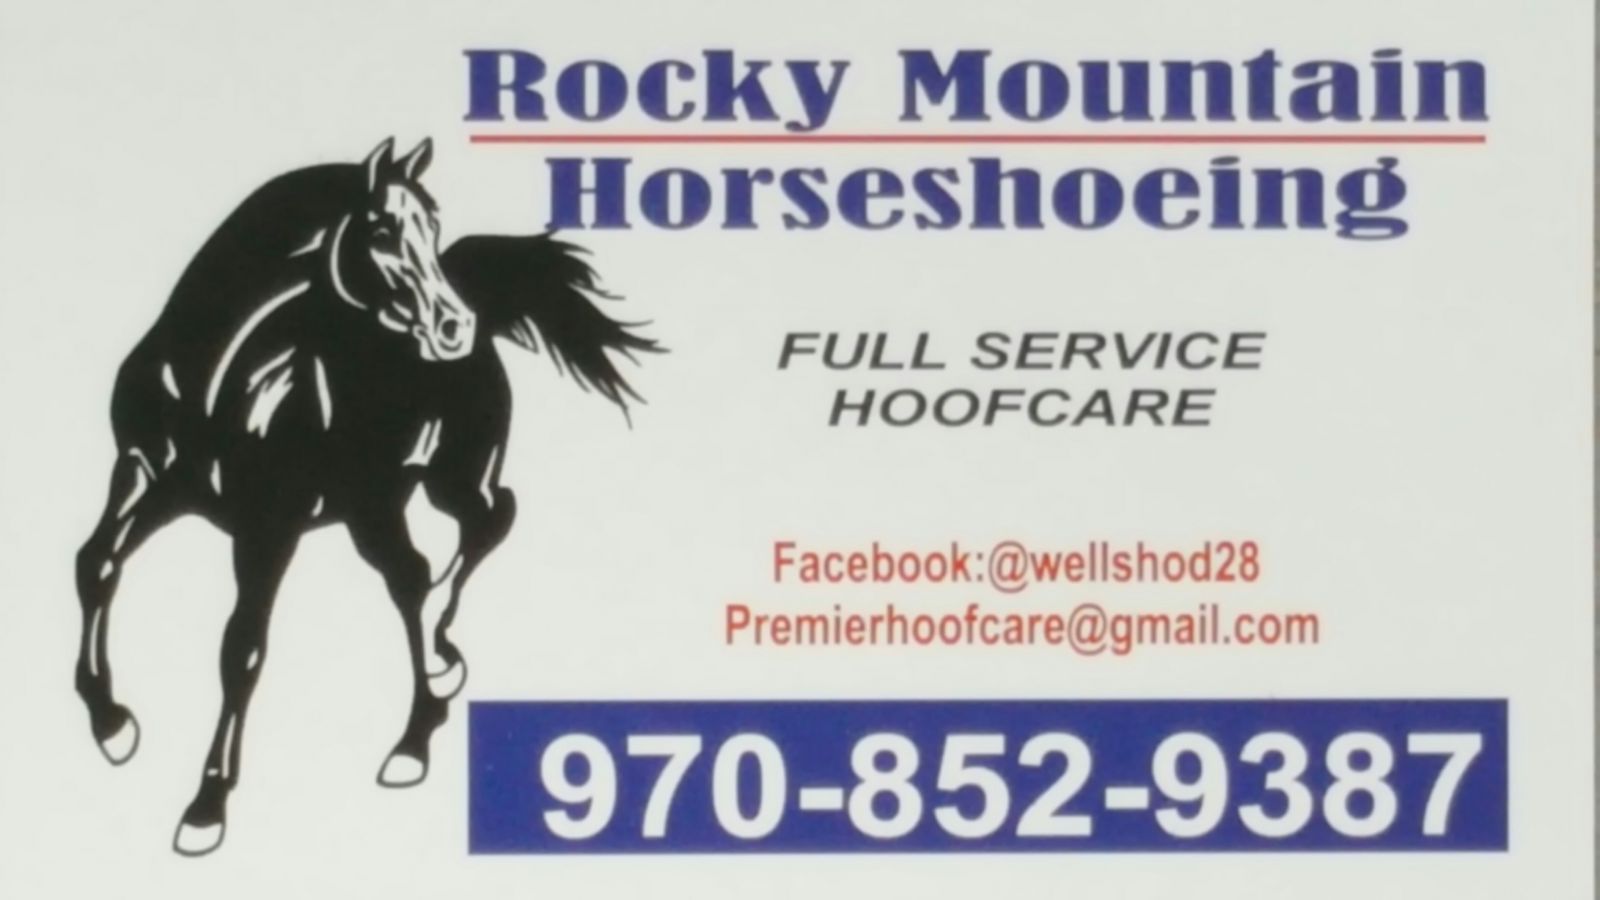 Visit Rocky Mountain Horseshoeing